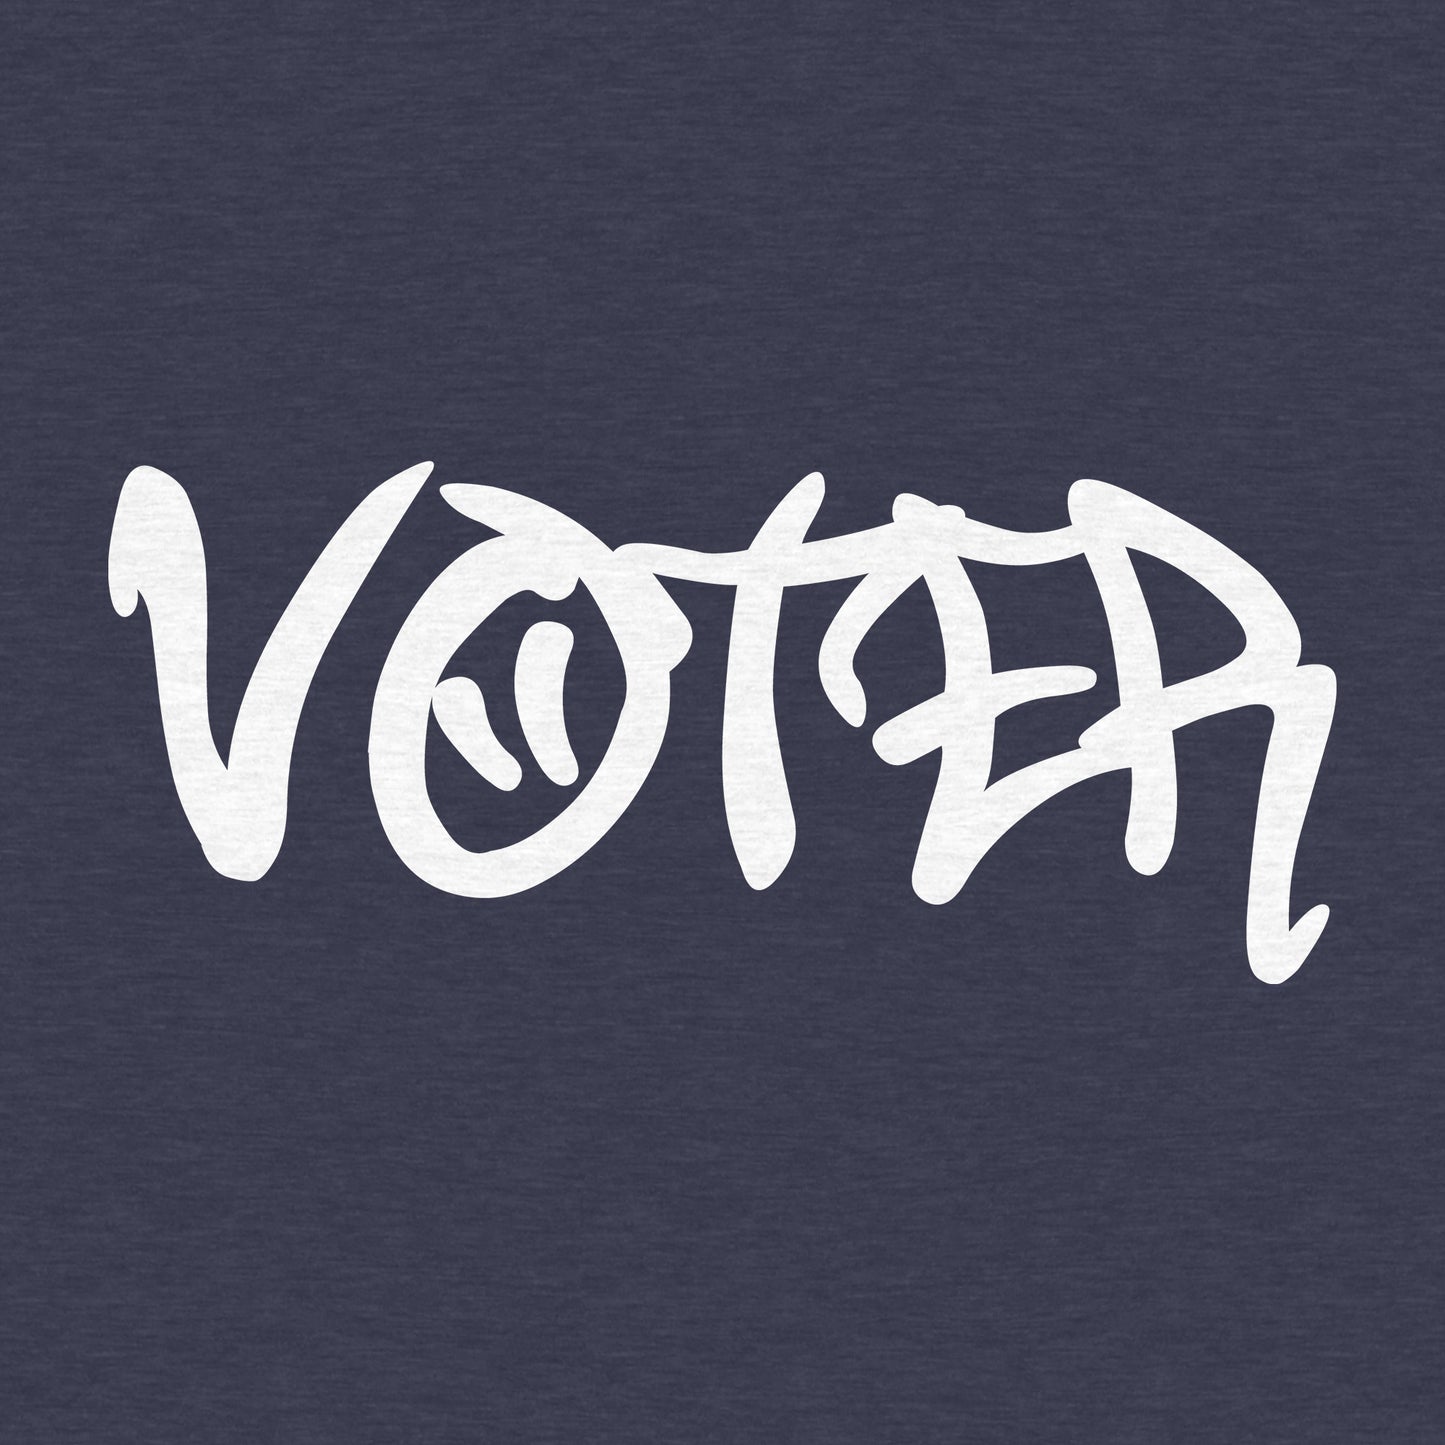 Voter, Election Day, Politics - Adult Unisex Jersey Crew Tee